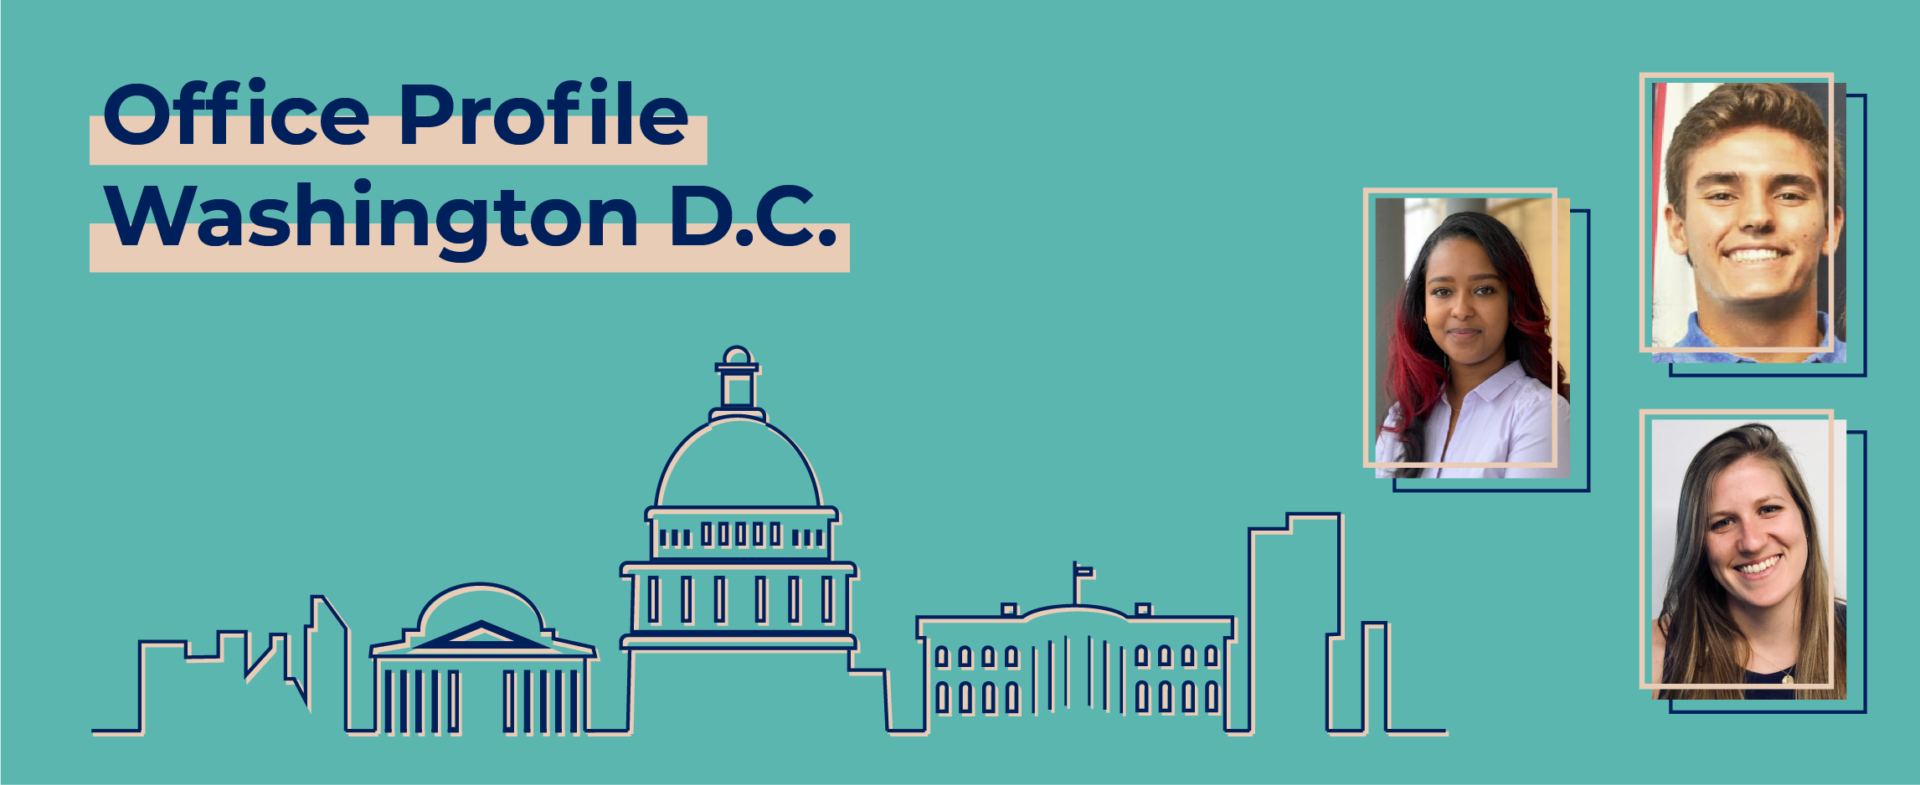 Office Profile: Washington D.C.